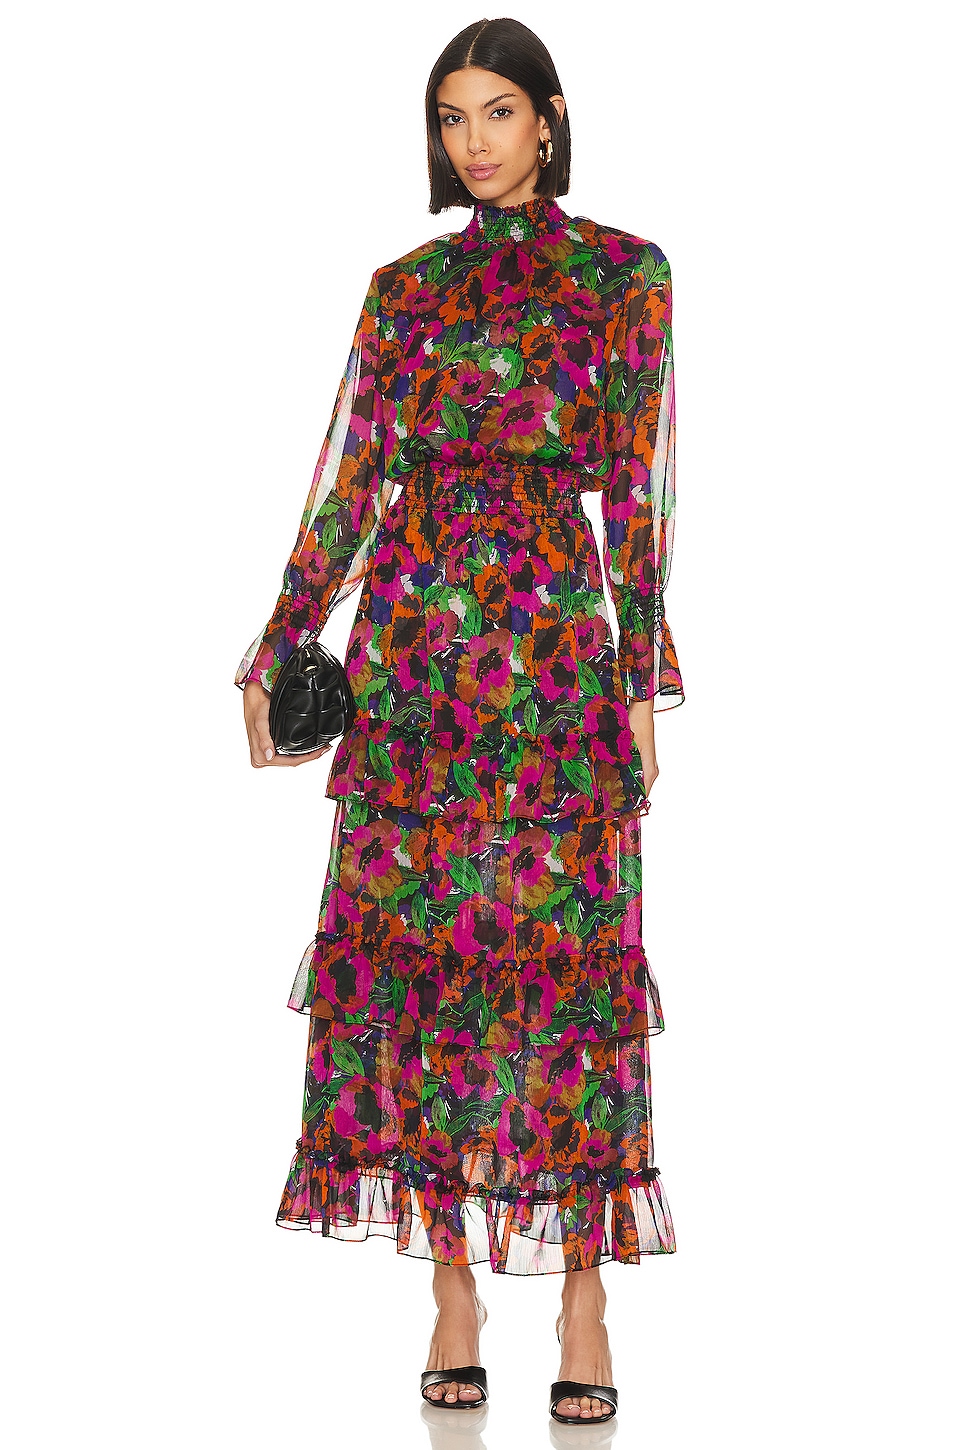 MISA Los Angeles Bethany Dress in Jewel Tone Flora | REVOLVE